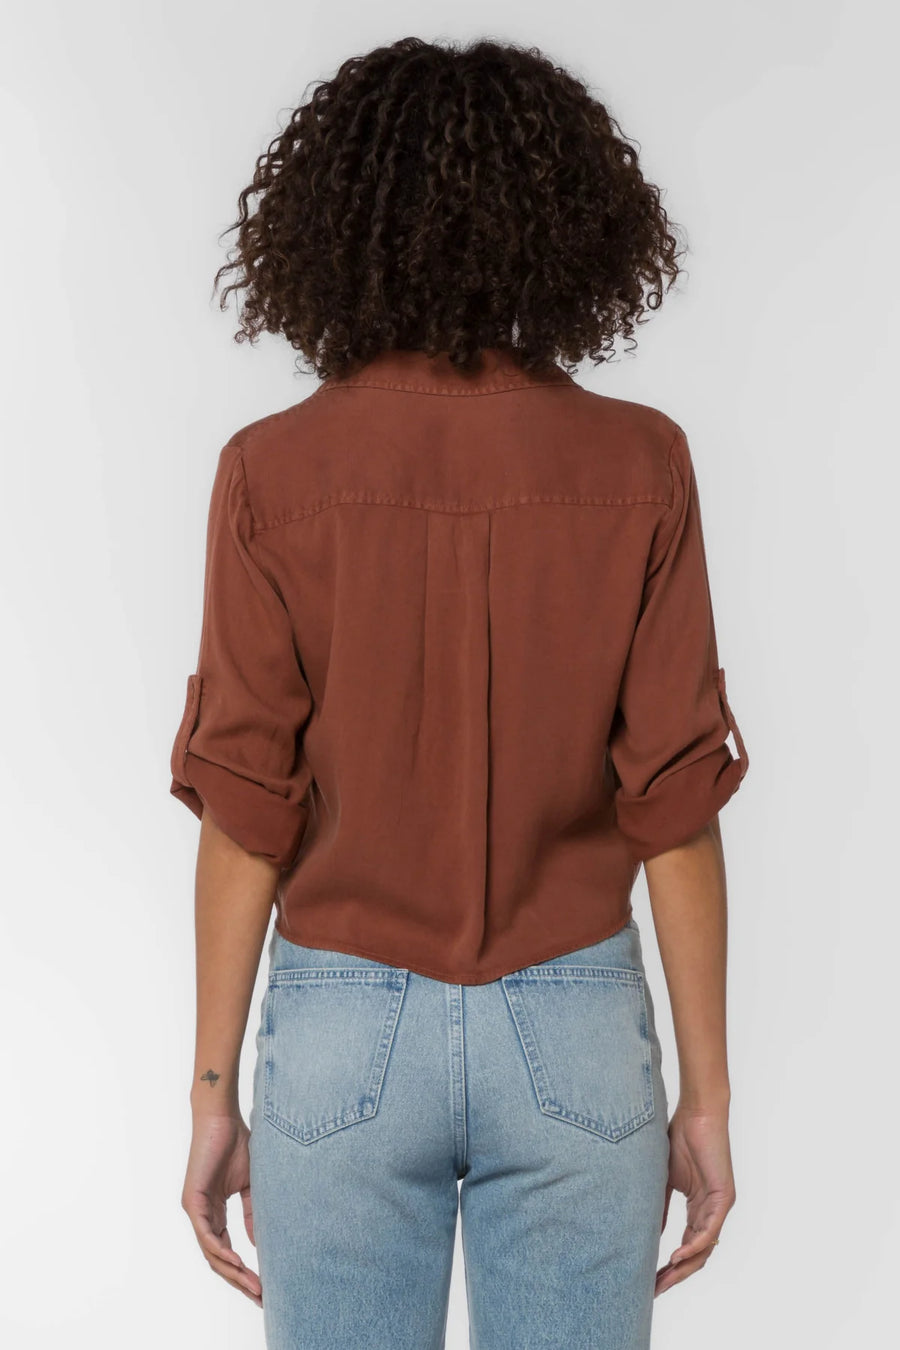 Solange Brown Shirt